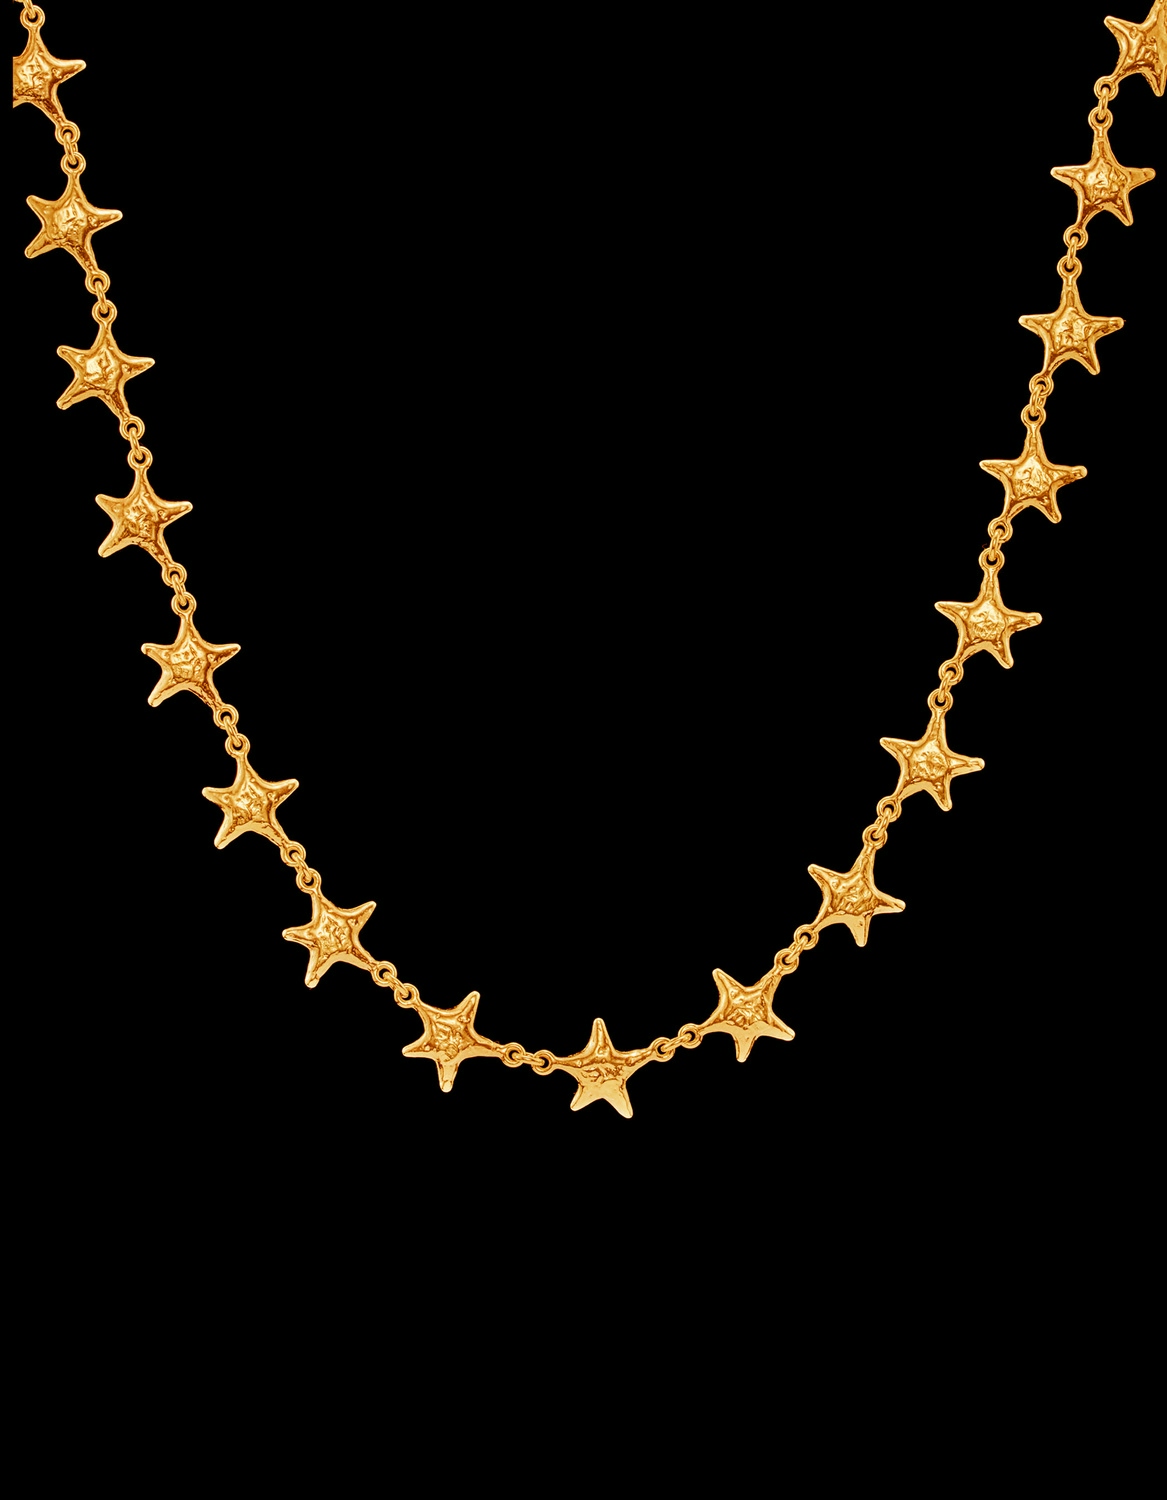 Stars Constellation Necklace-image-1